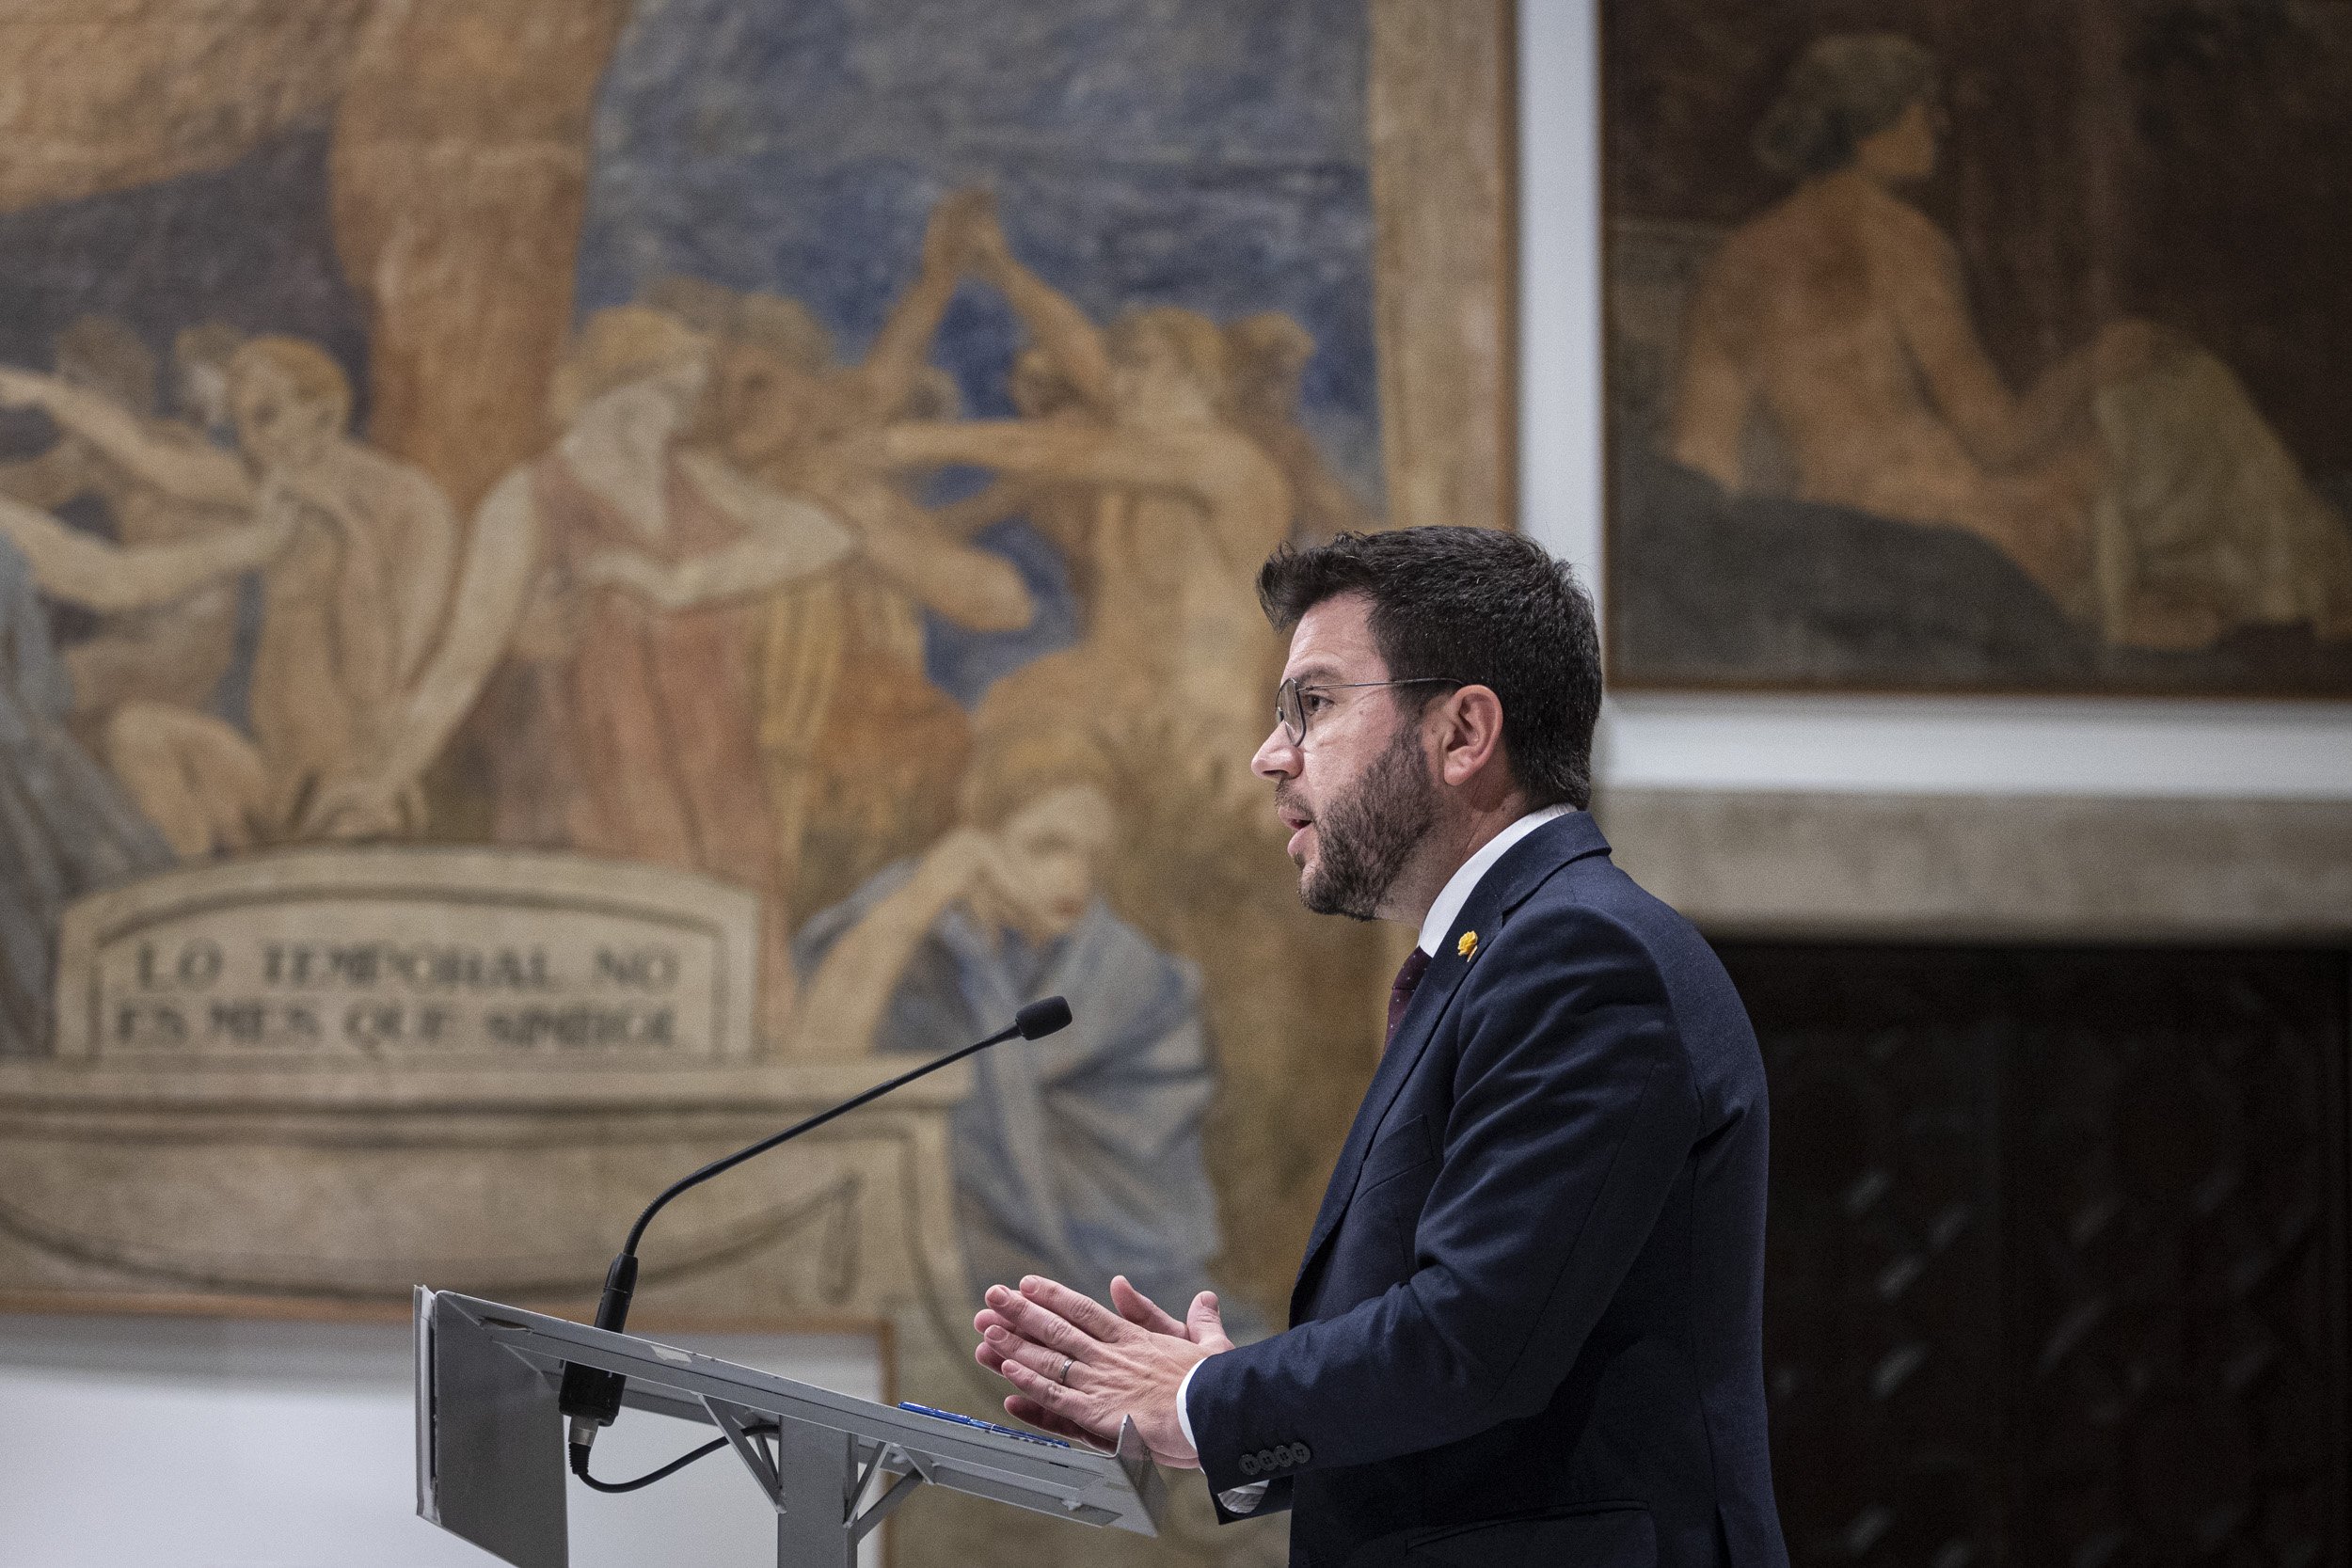 Aragonès, dispuesto a "escuchar otros mecanismos" alternativos a un referéndum sobre independencia